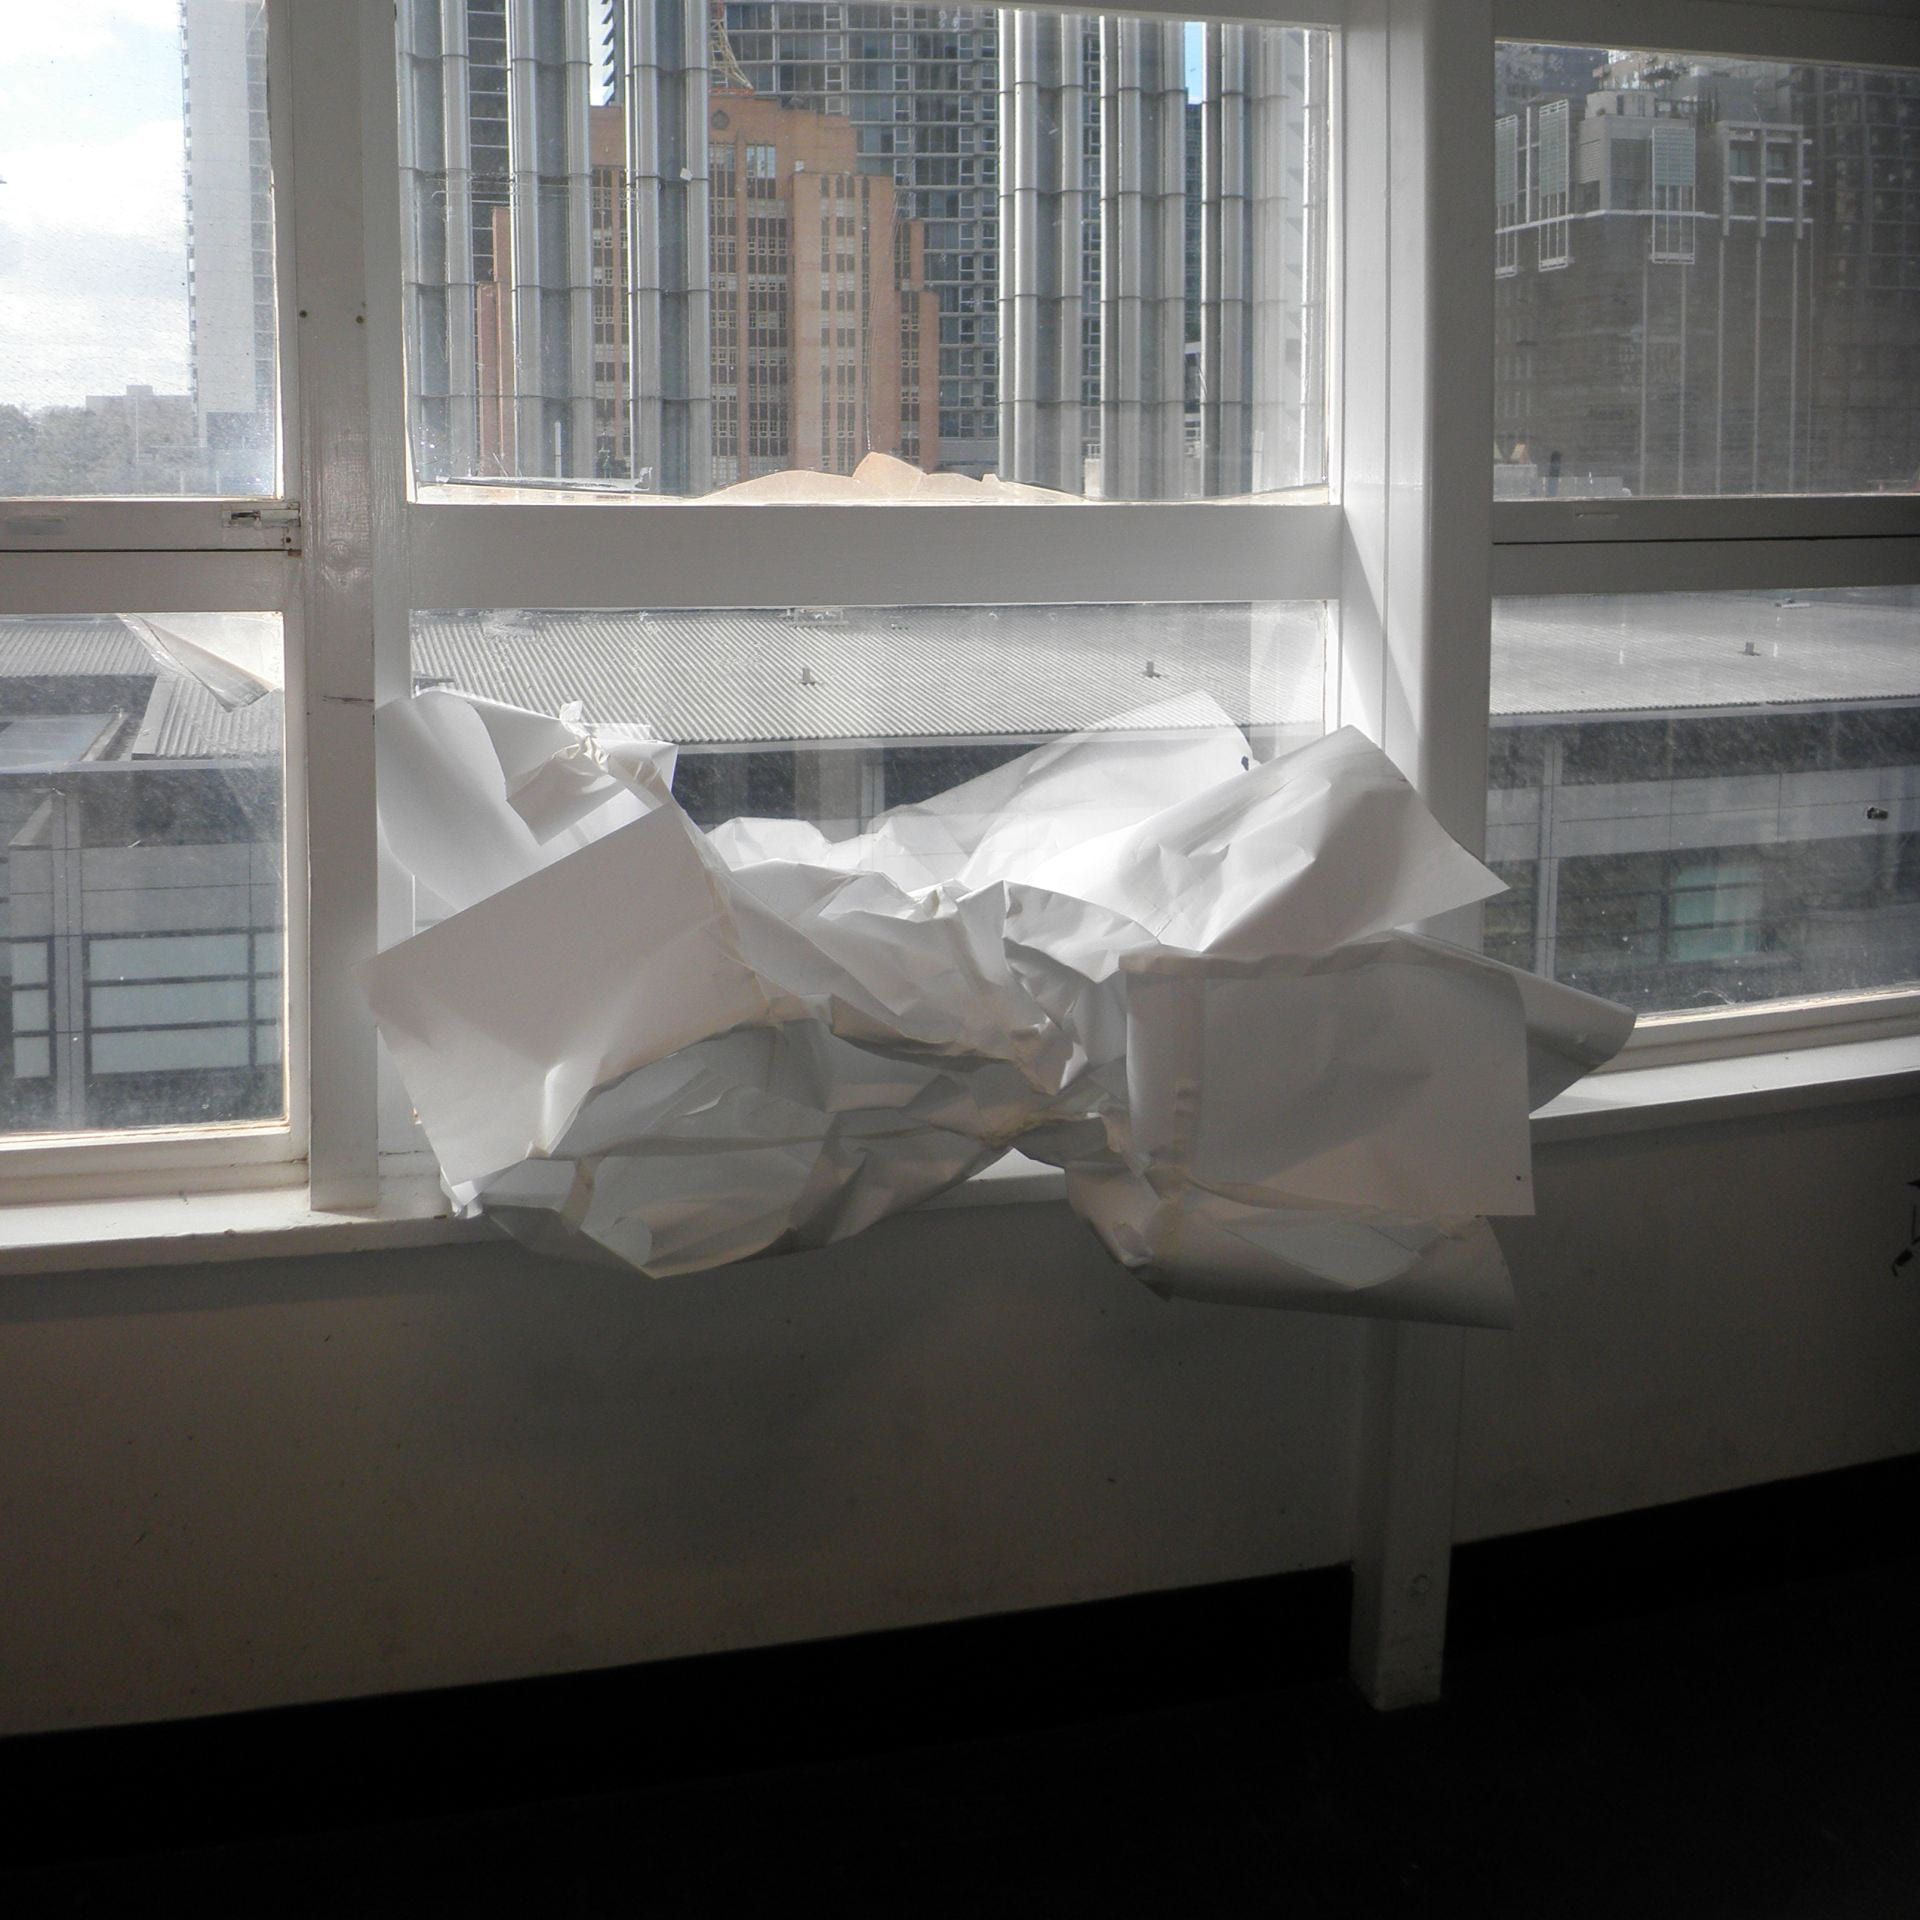 Paper sculpture sitting on window sill